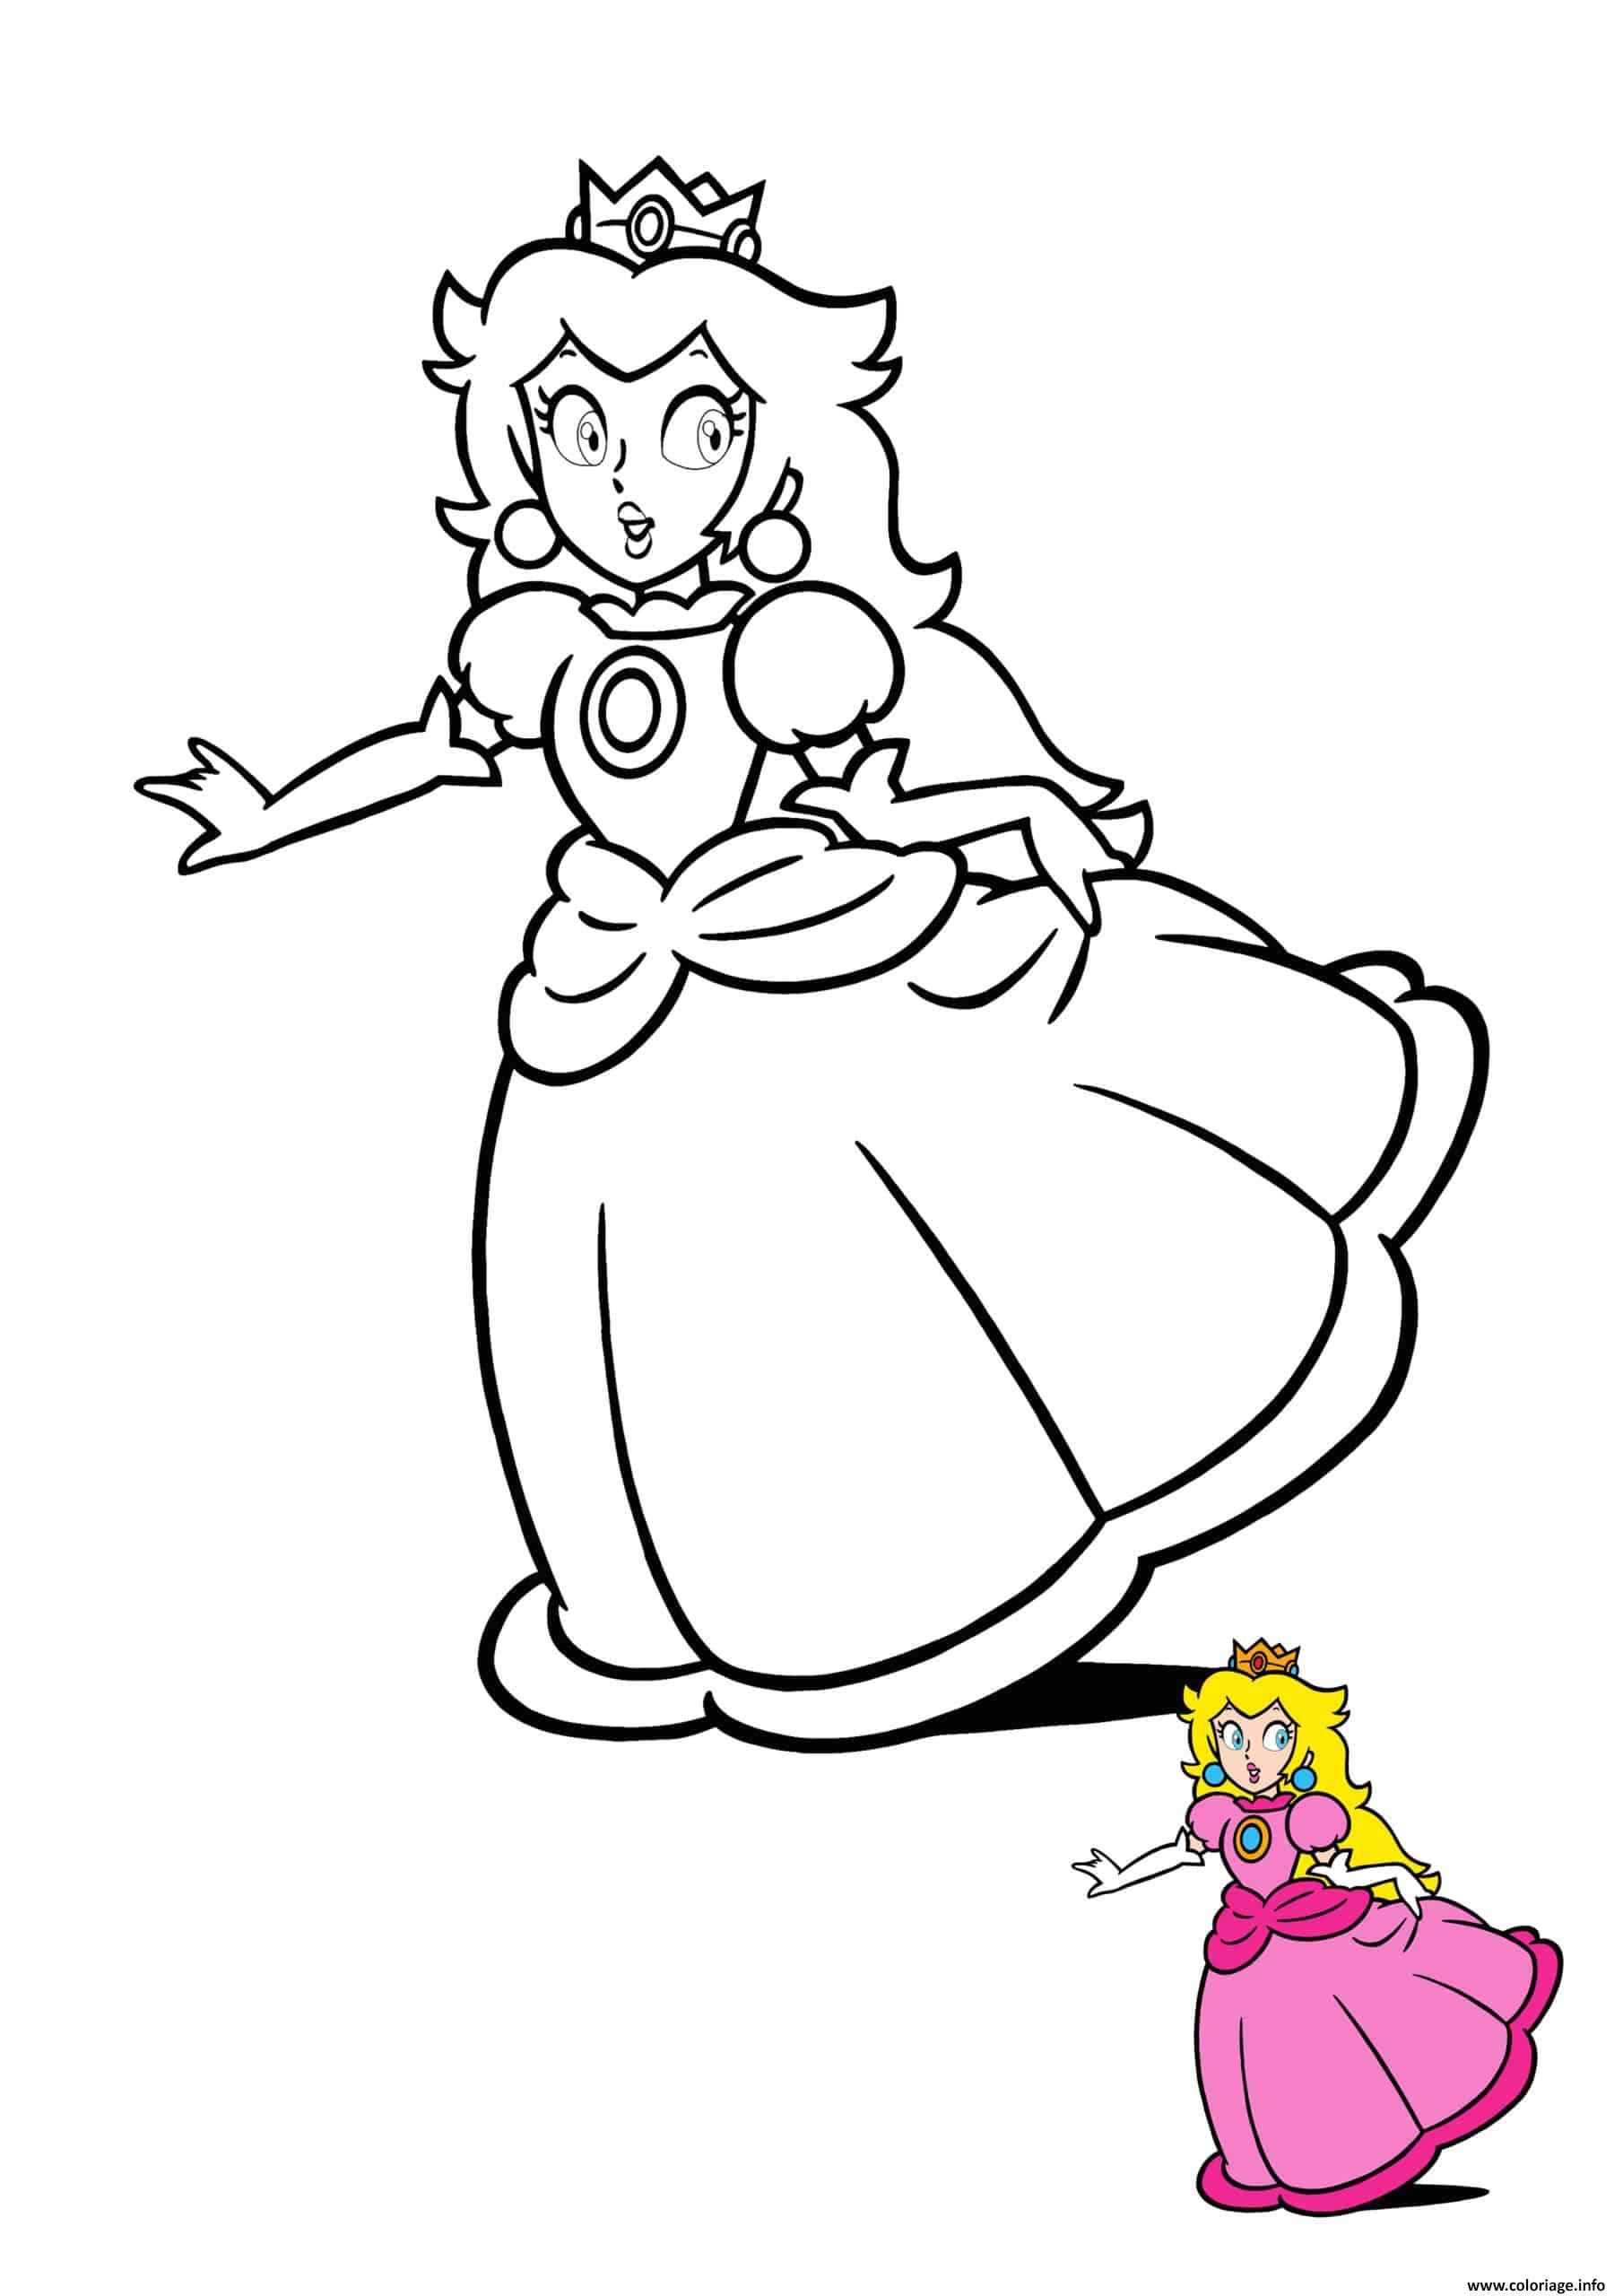 coloriage princesse peach dessin a imprimer empiler le macarons de shopkins